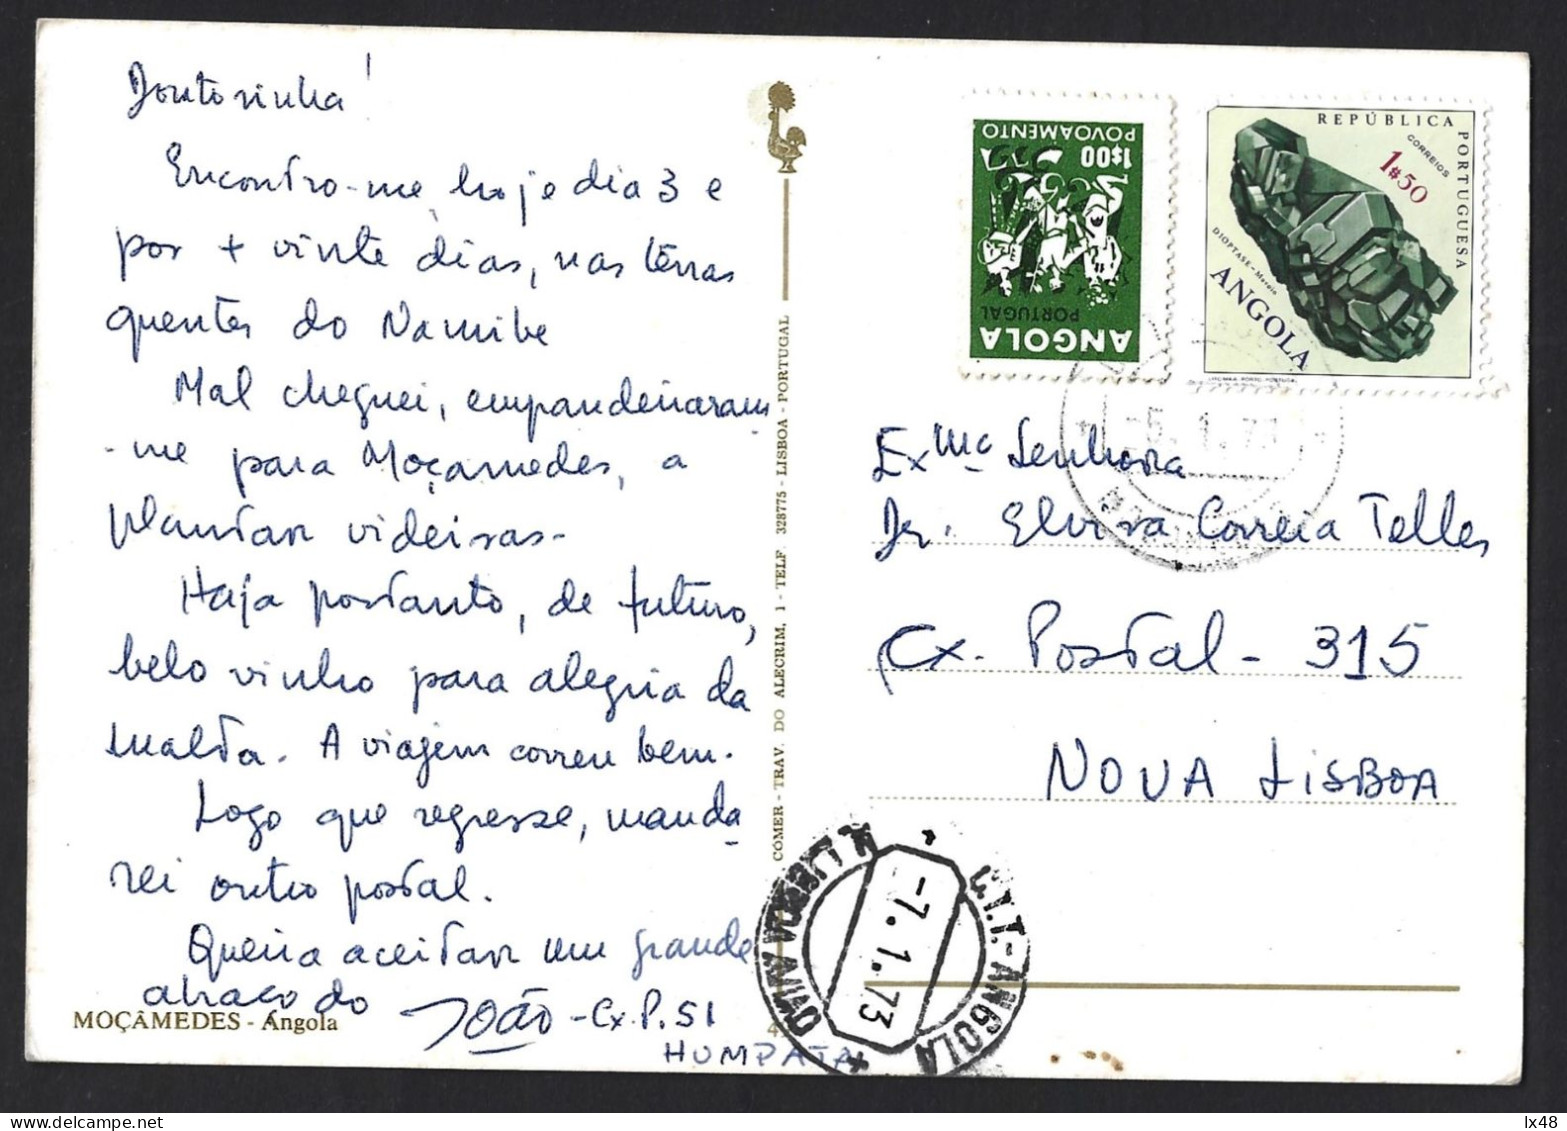 Postal De Moçamedes, Angola Circulado Para Nova Lisboa, Stamps Povoamento E Mineral Dioptase. - Angola